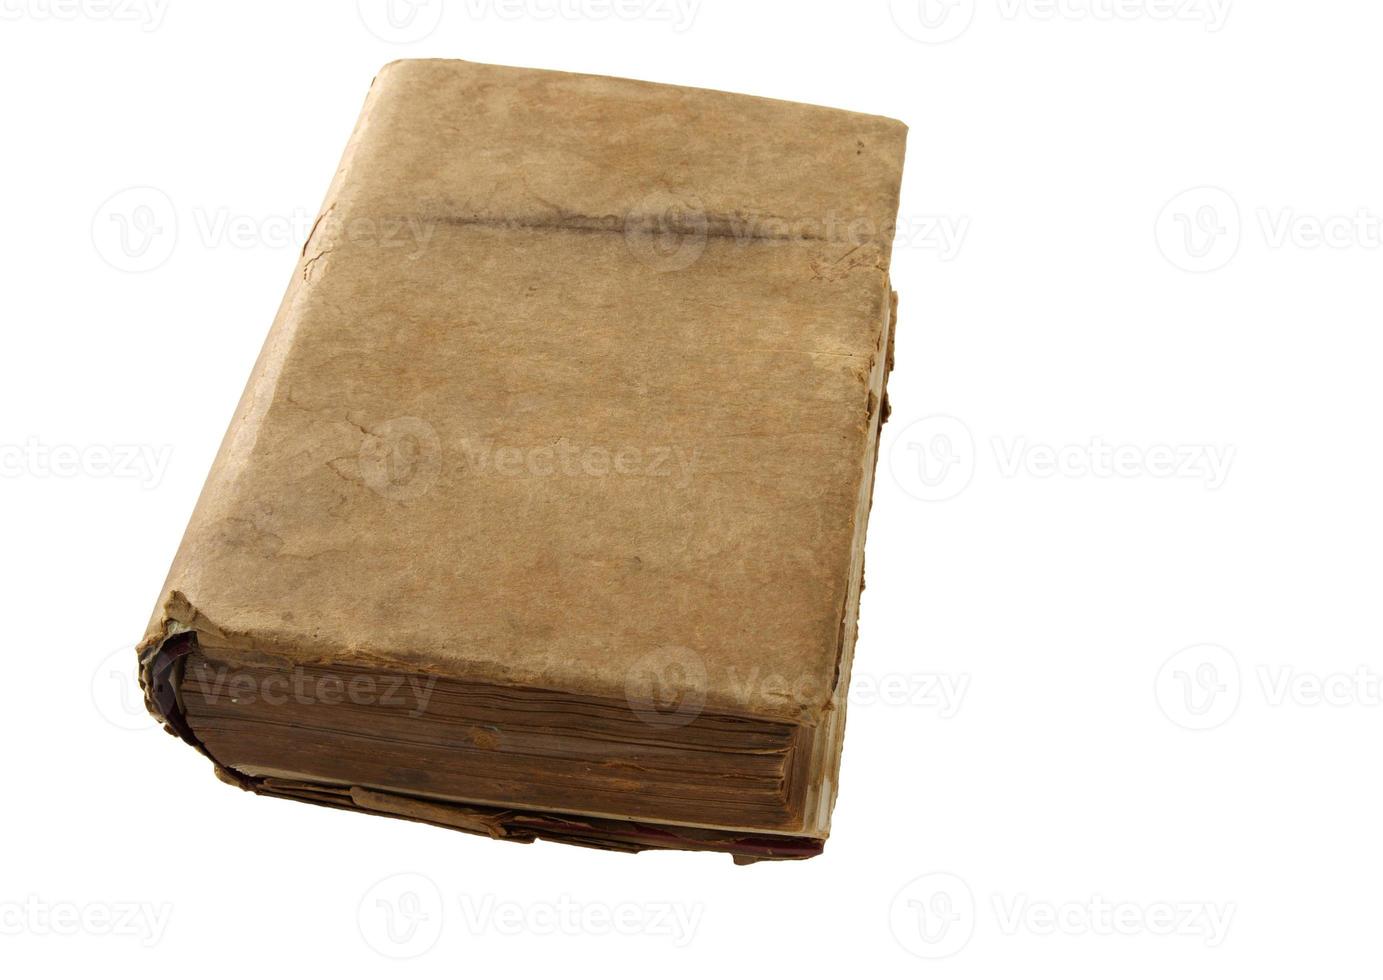 oud boek geïsoleerd Aan wit achtergrond met knipsel pad foto